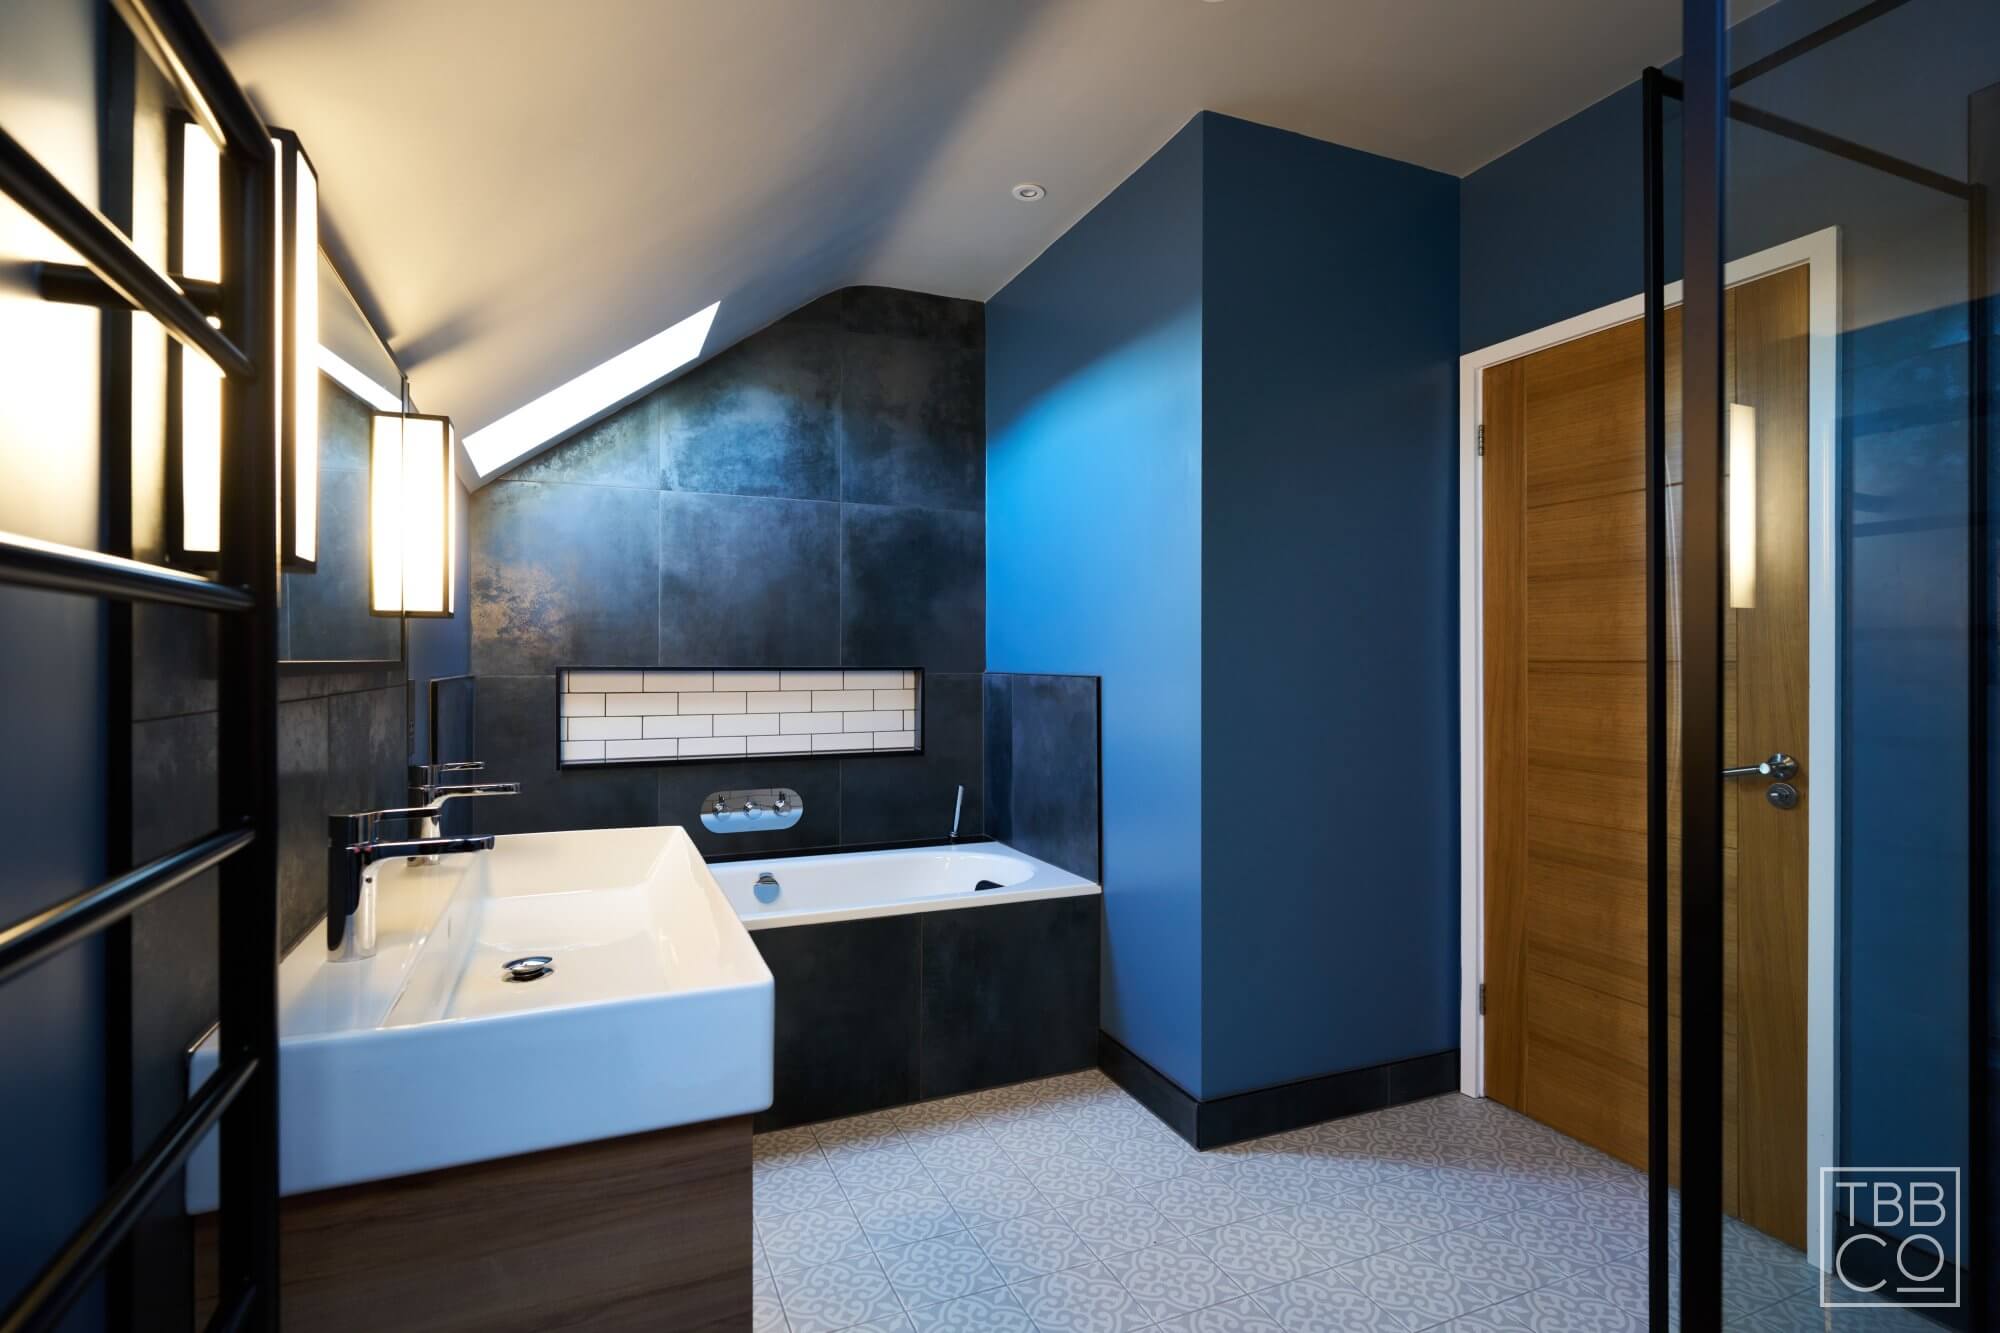 Blue and Black Bathroom Design with Crittle Shower Enclosure